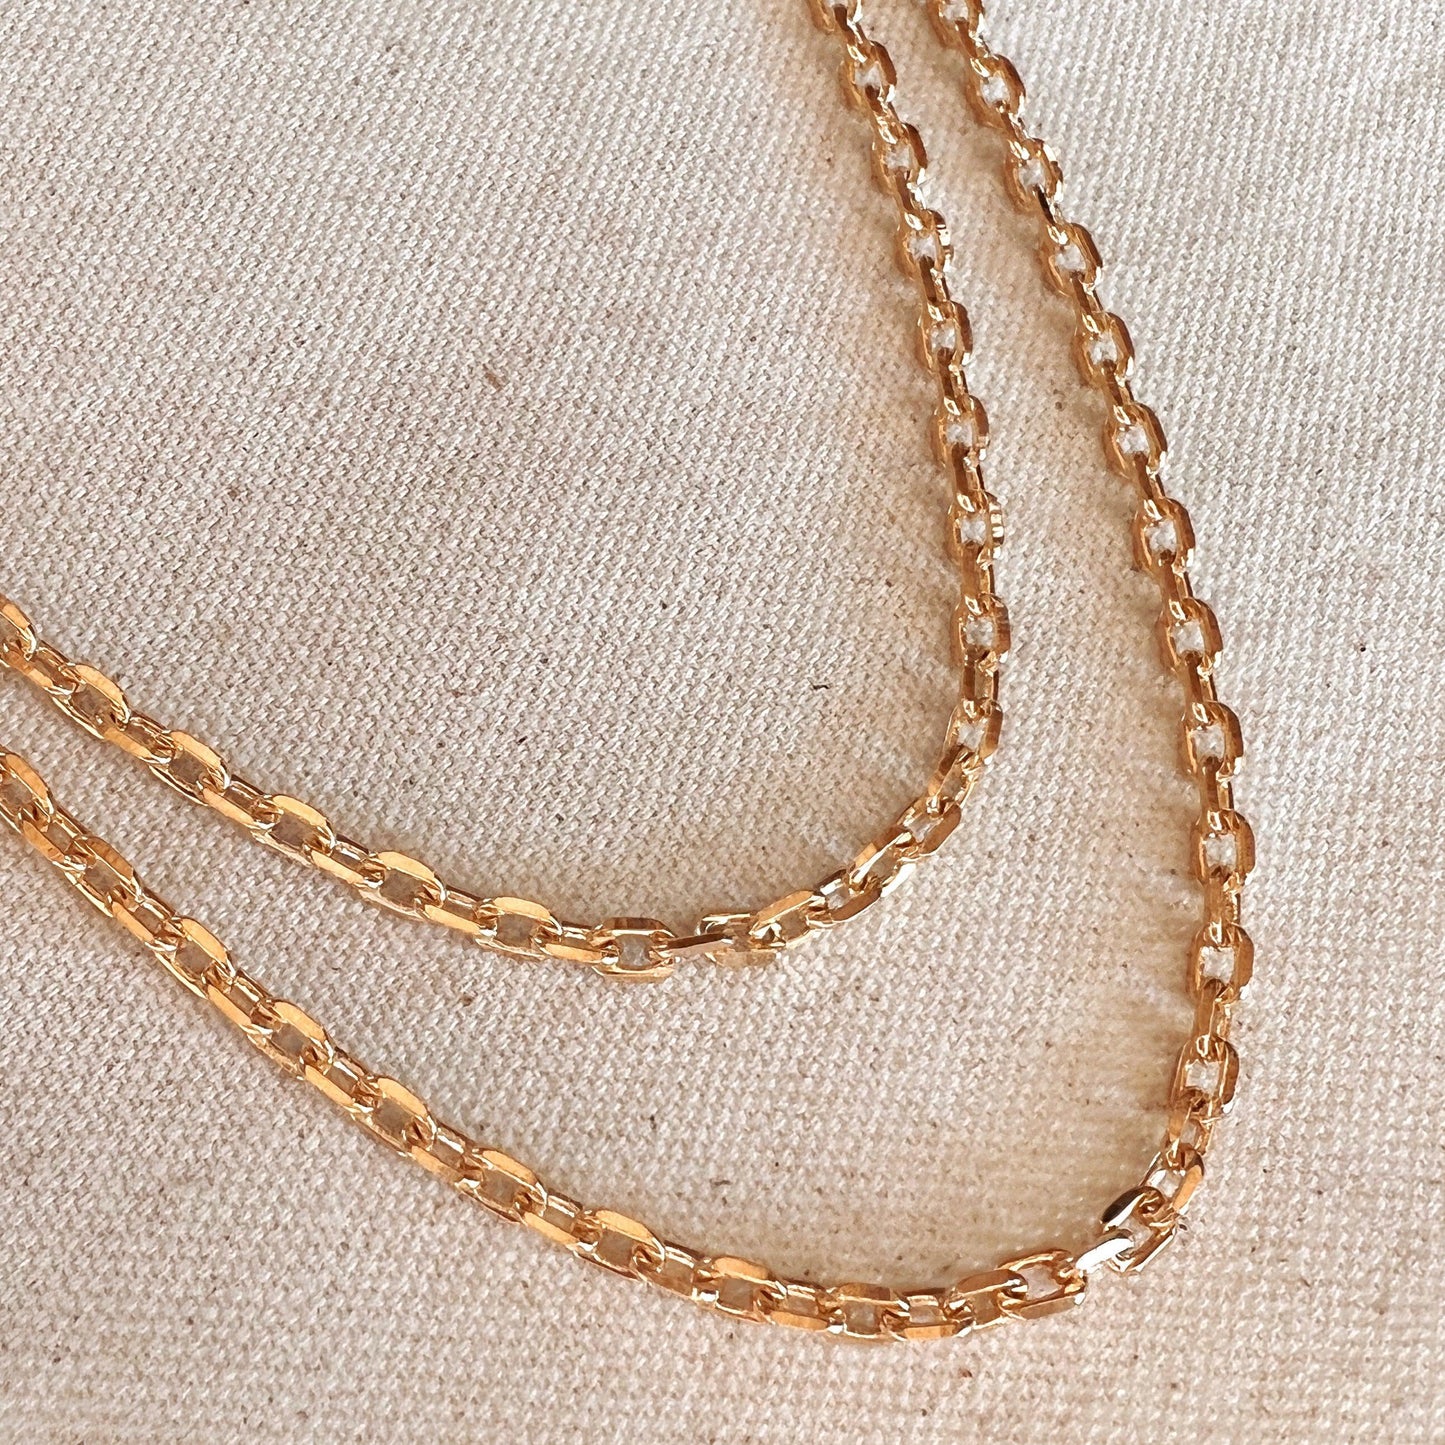 GoldFi Gorgeous Unique 18k Gold Filled Link Chain